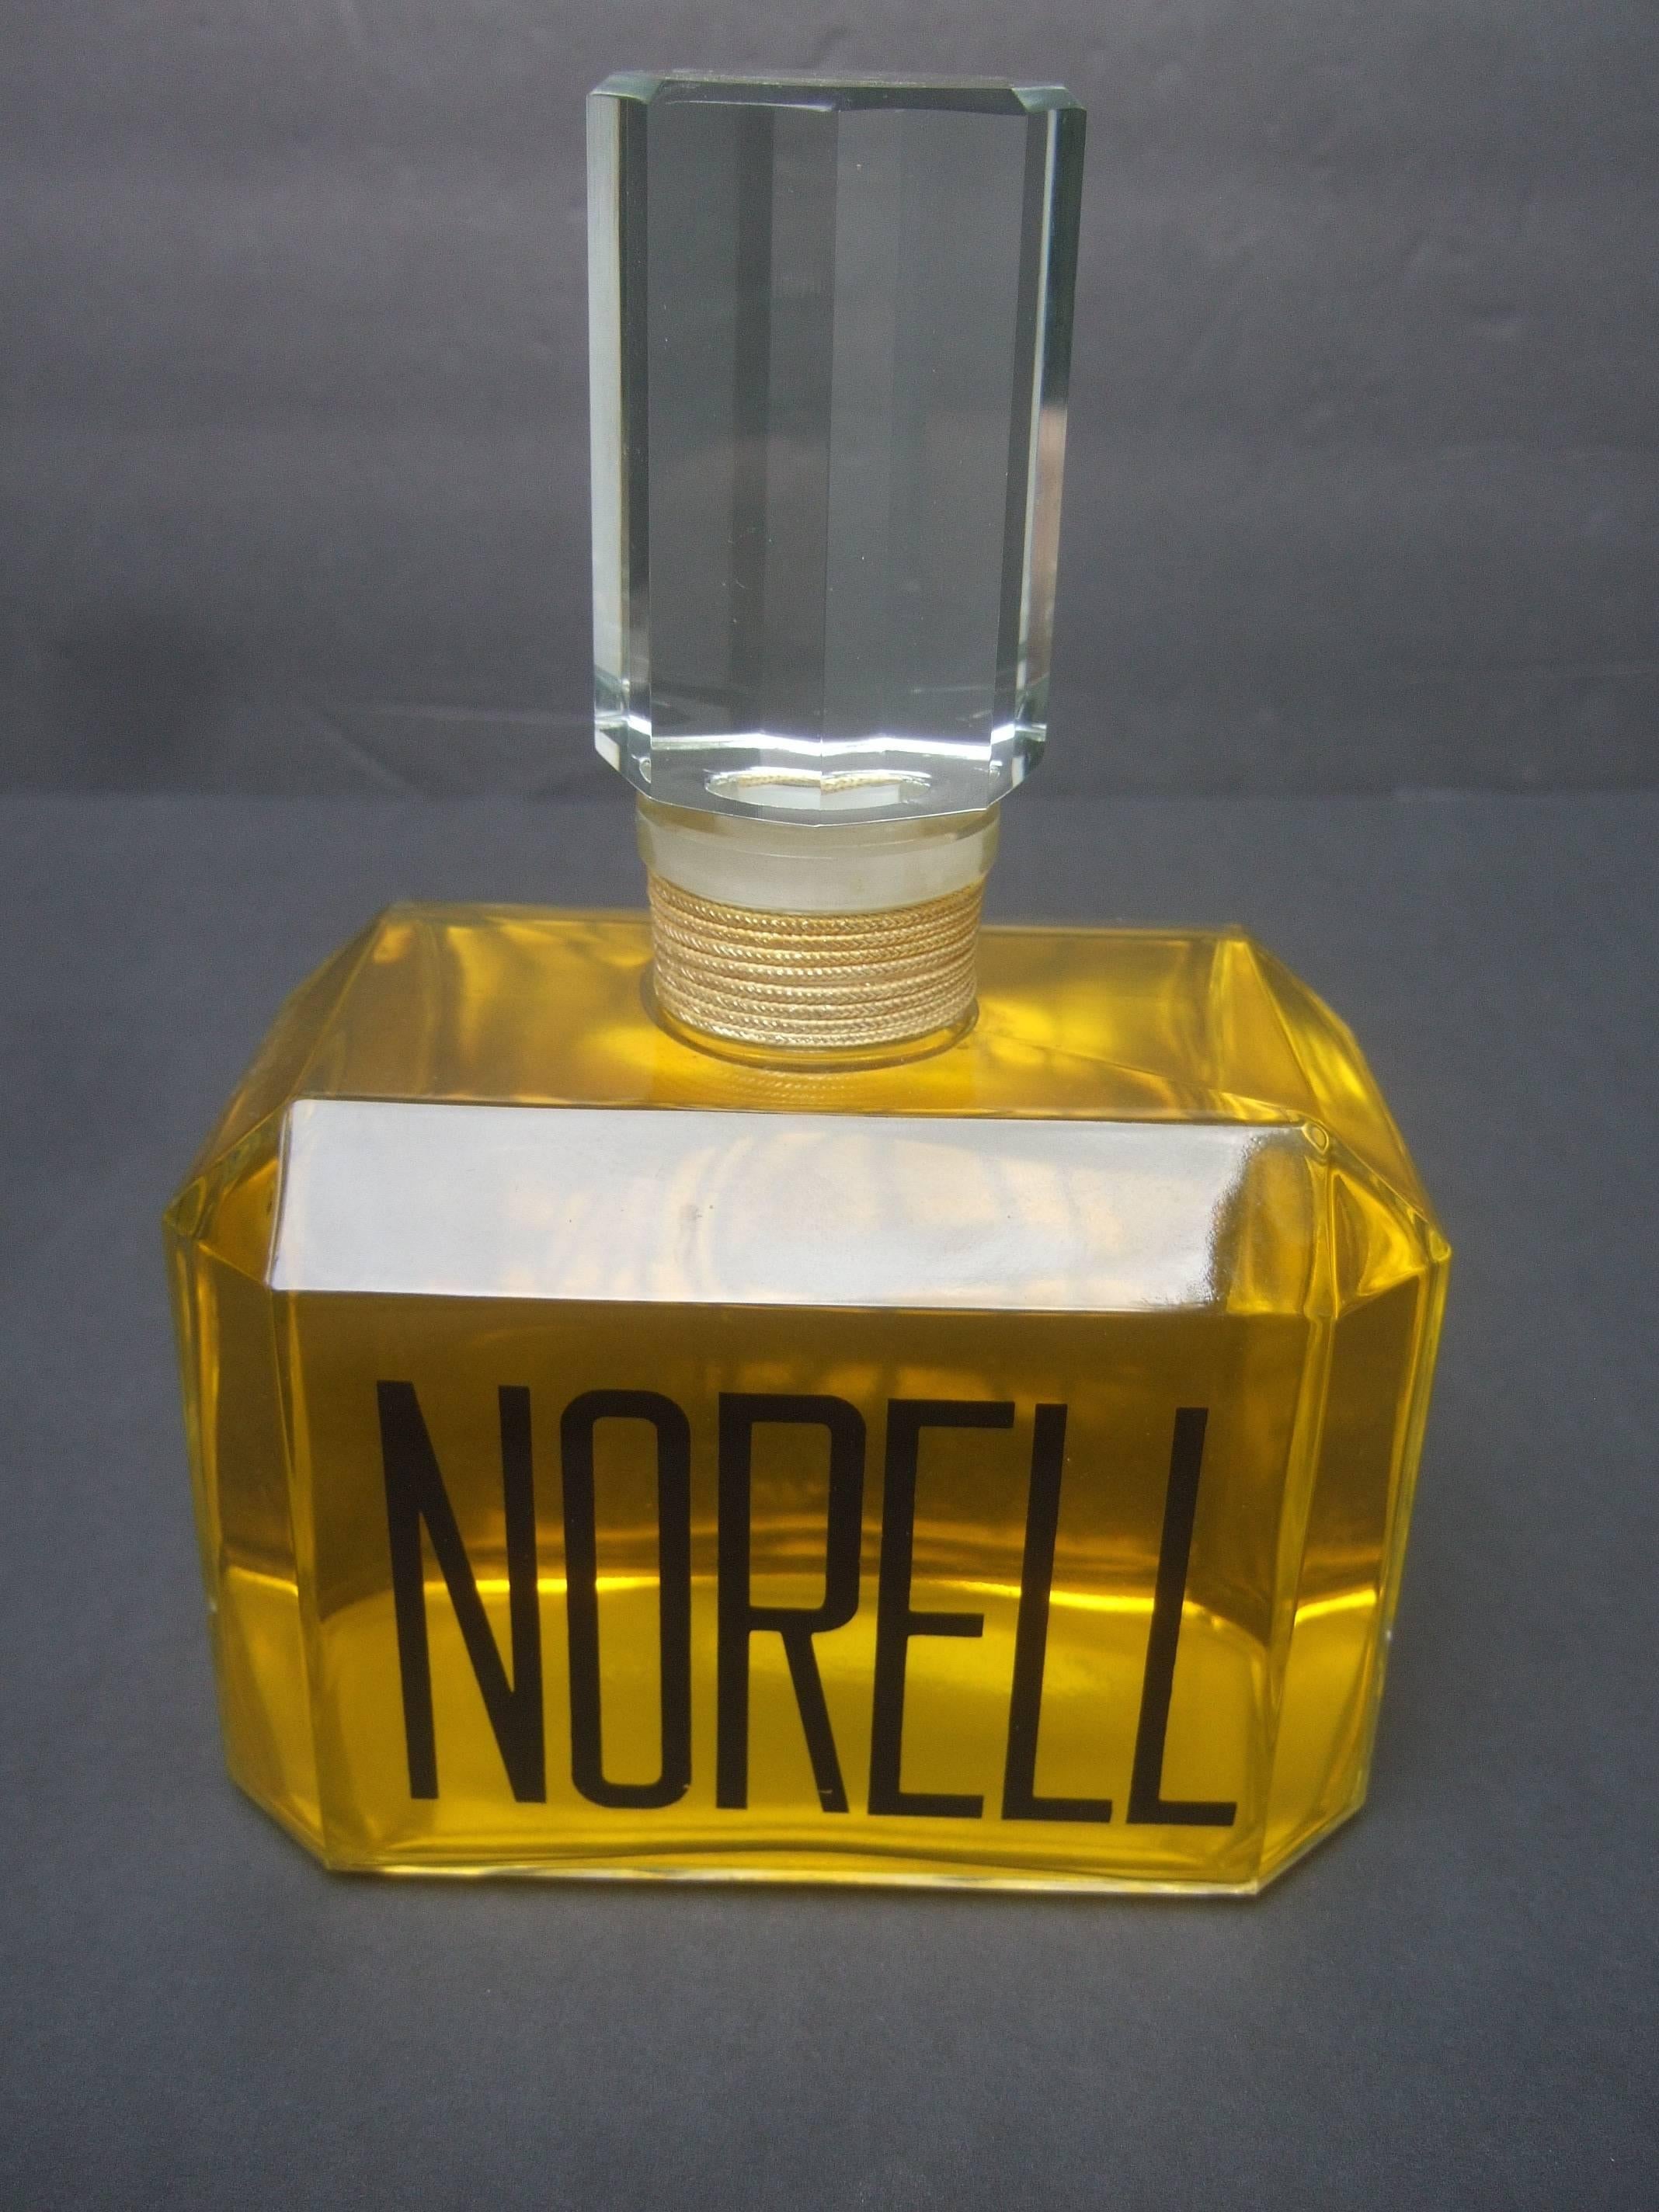 Norell Sleek Large Crystal Factice Fragrance Display Bottle  1